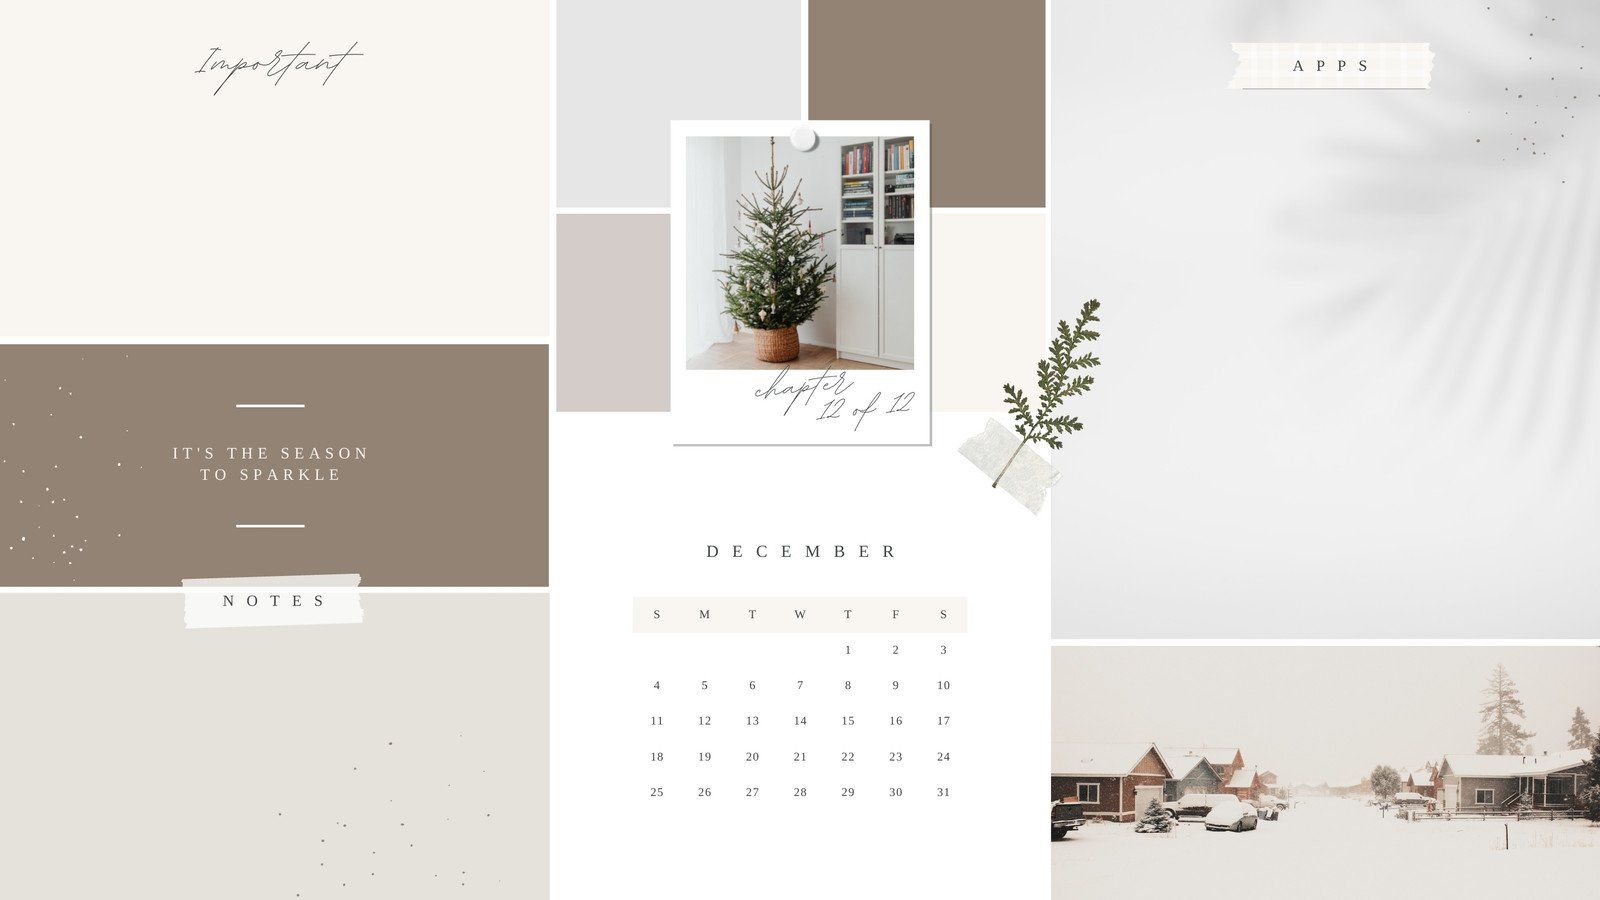 2018 calendar in a minimalist style - December